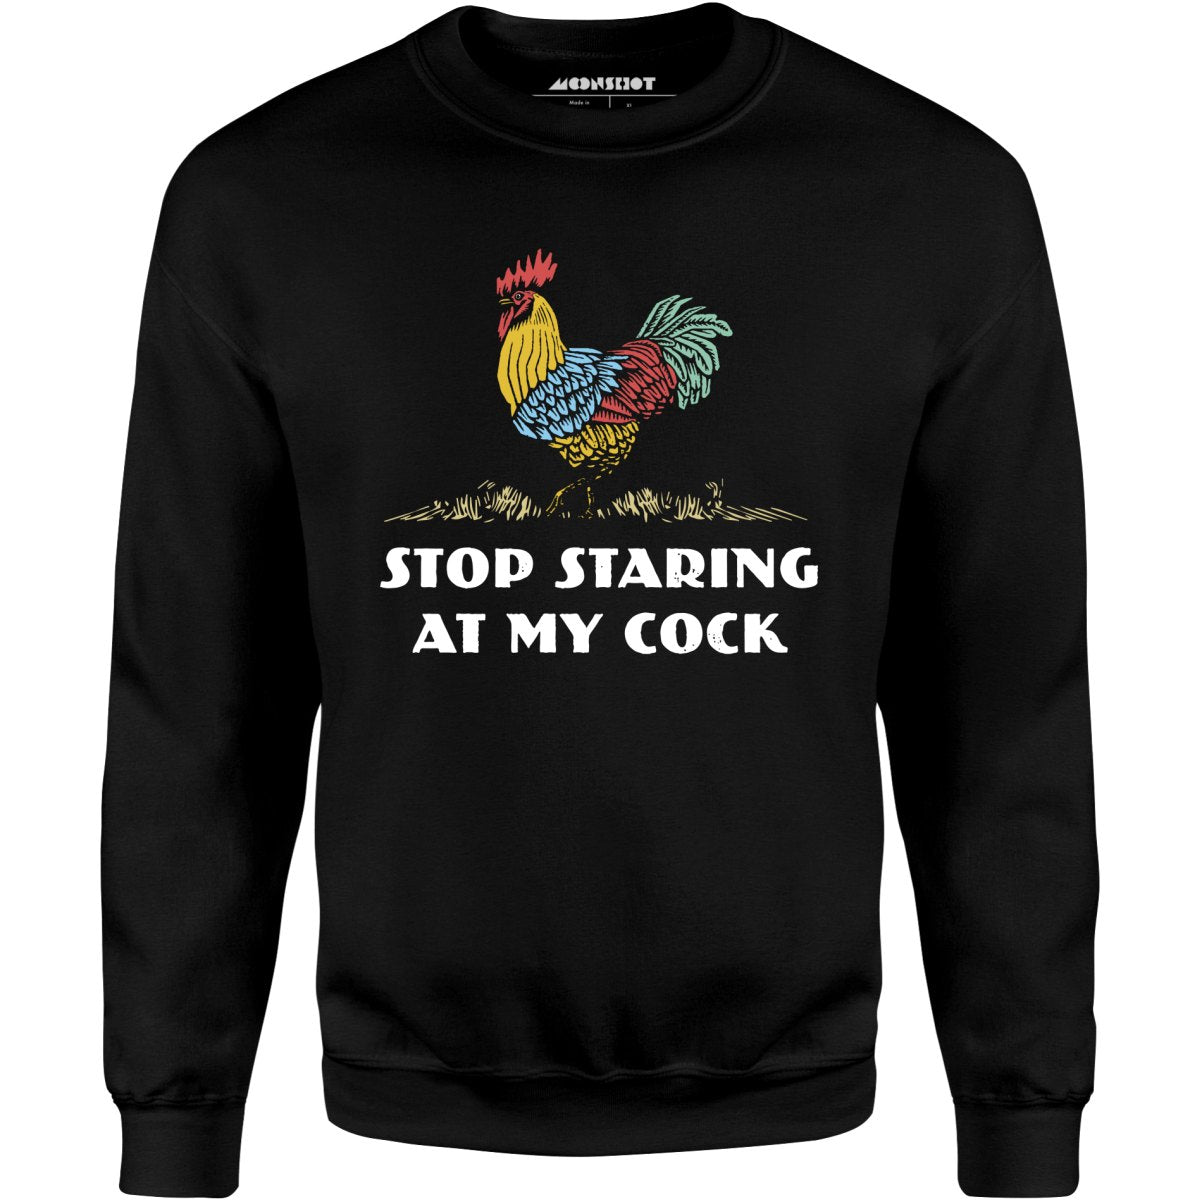 Stop Staring at My Cock - Unisex Sweatshirt